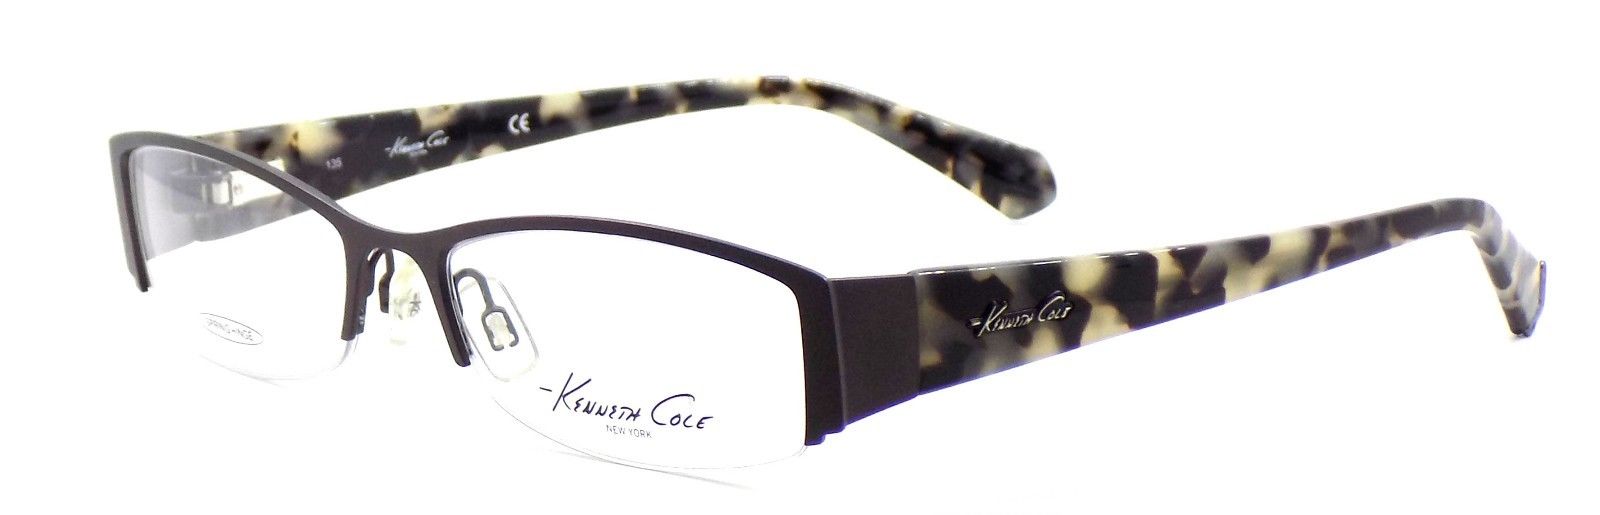 1-Kenneth Cole NY KC203 002 Women's Eyeglasses Frames 53-17-135 Matte Black + CASE-664689595563-IKSpecs